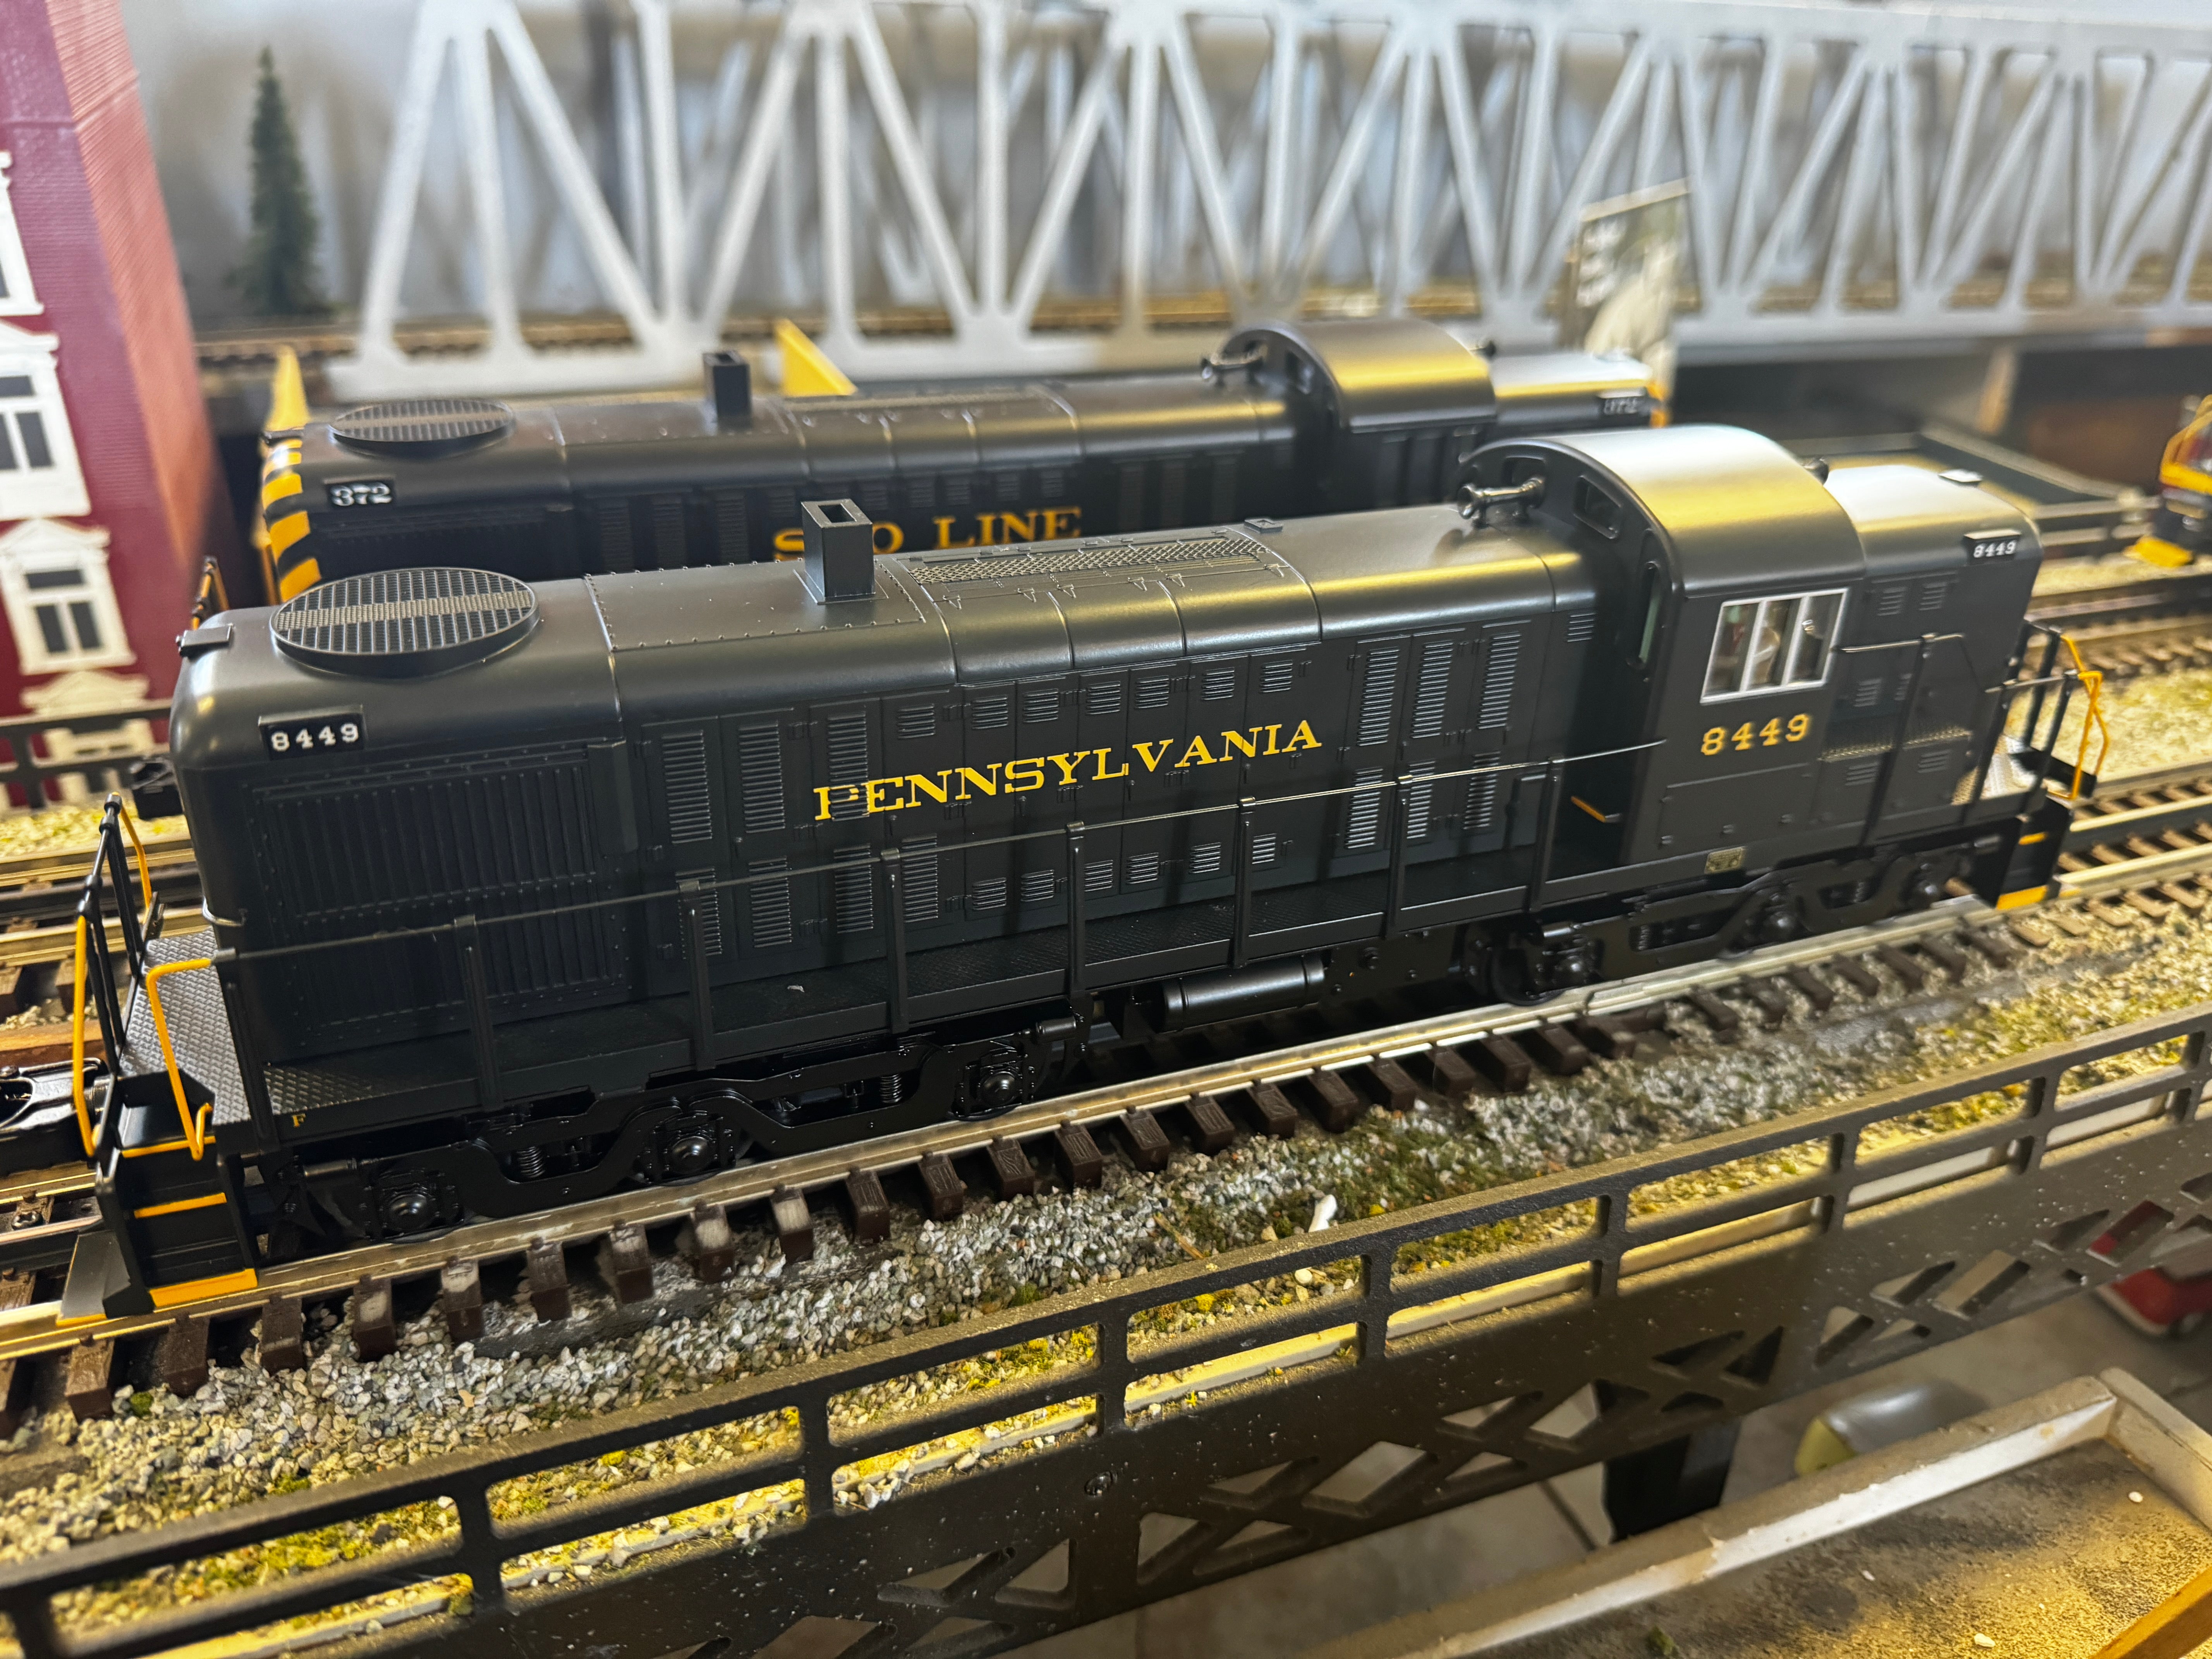 MTH 30-21171-1 - RSD-5 Diesel Engine "Pennsylvania" #8449 w/ PS3